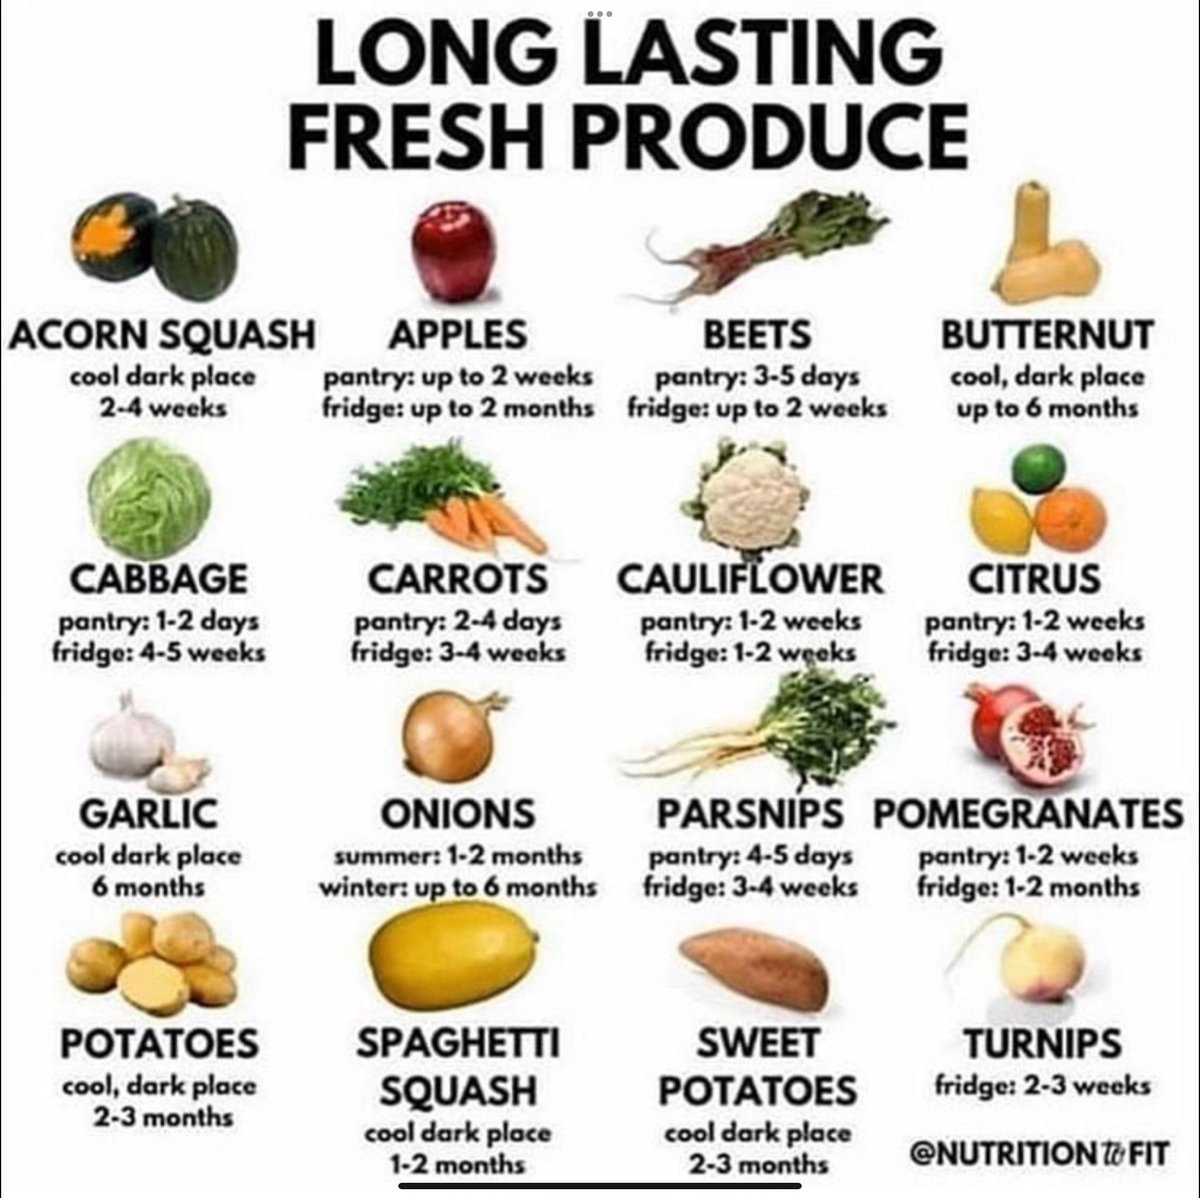 Long lasting vegetables #eatyourveggies #vegan #vegetarian #healthychoices #farmtotable #veganfood #youarewhatyoueat #didyouknow #vegetarianfood #fruitsandvegetables #healthyeating #healthyliving #healthy #healthylifestyle